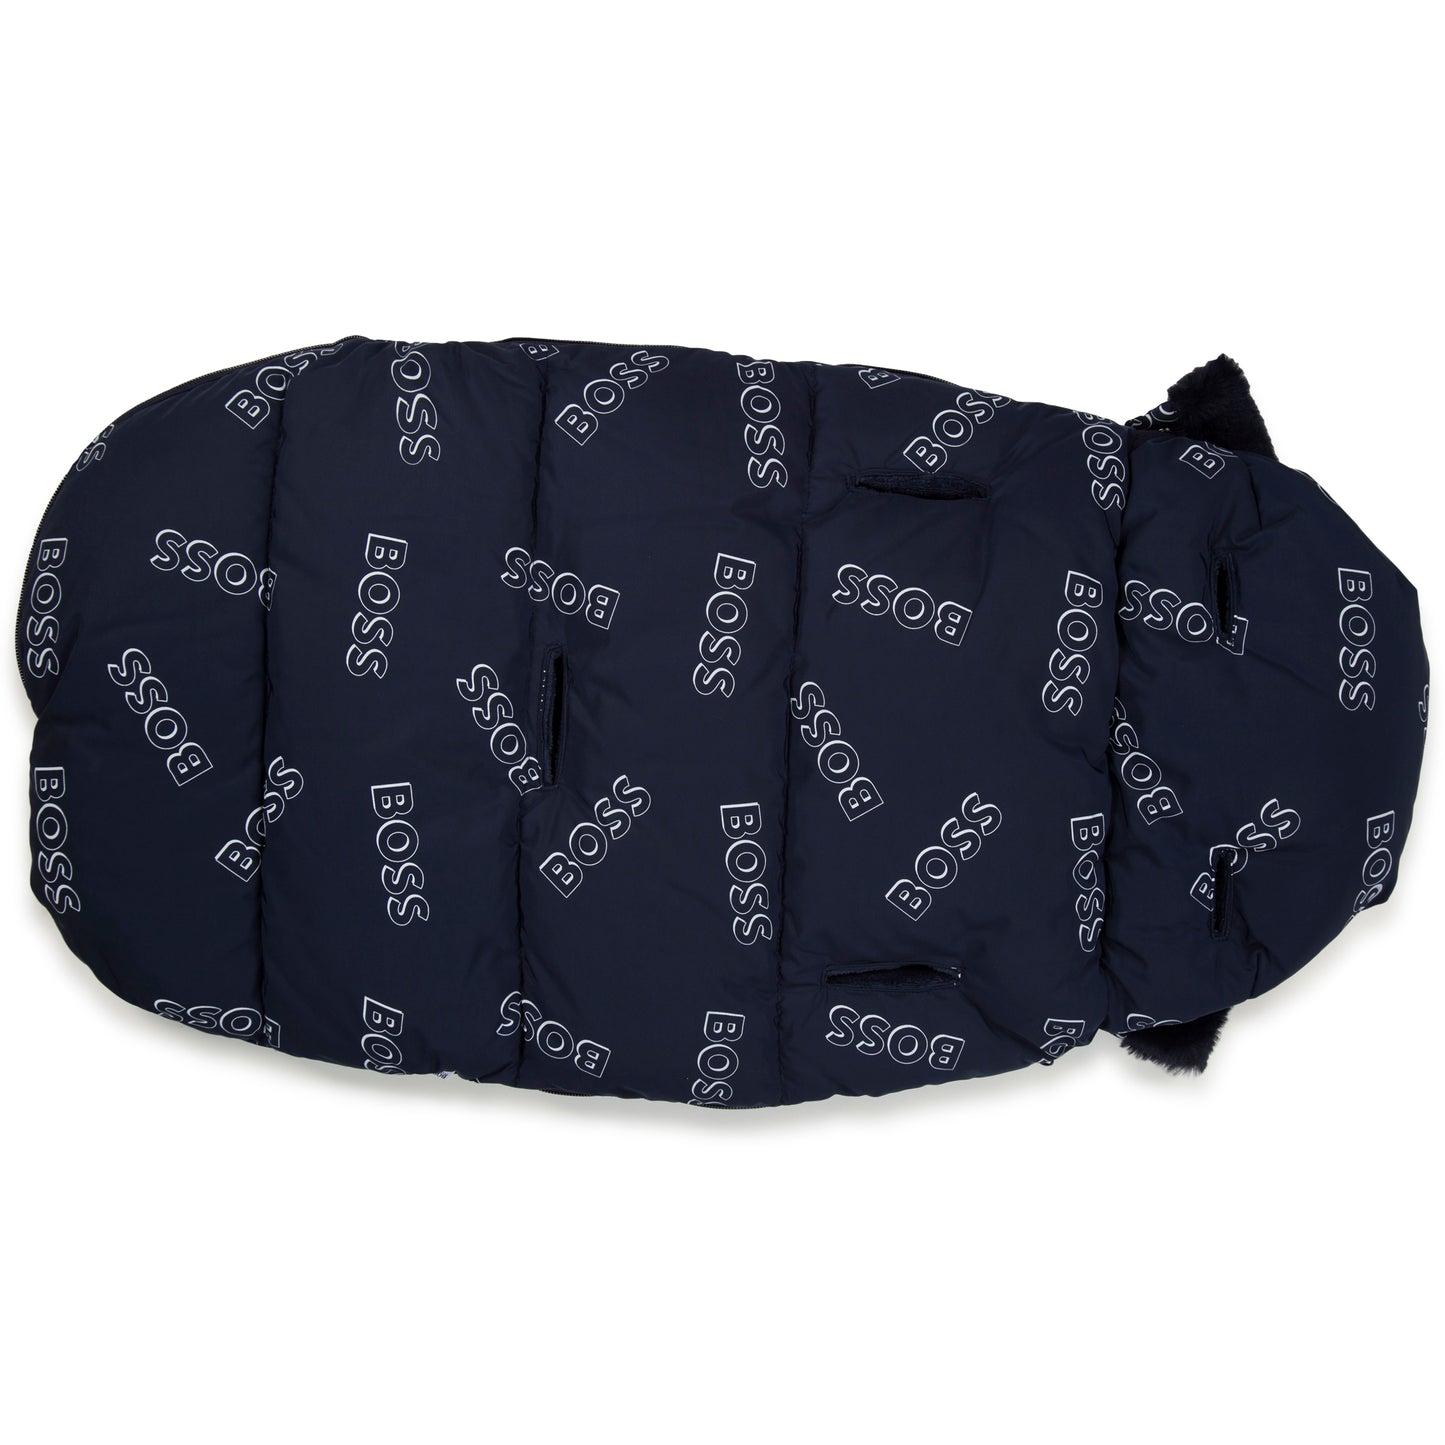 Hugo Boss Baby Sleeping Bag (Carrycot) _Navy J90280-849